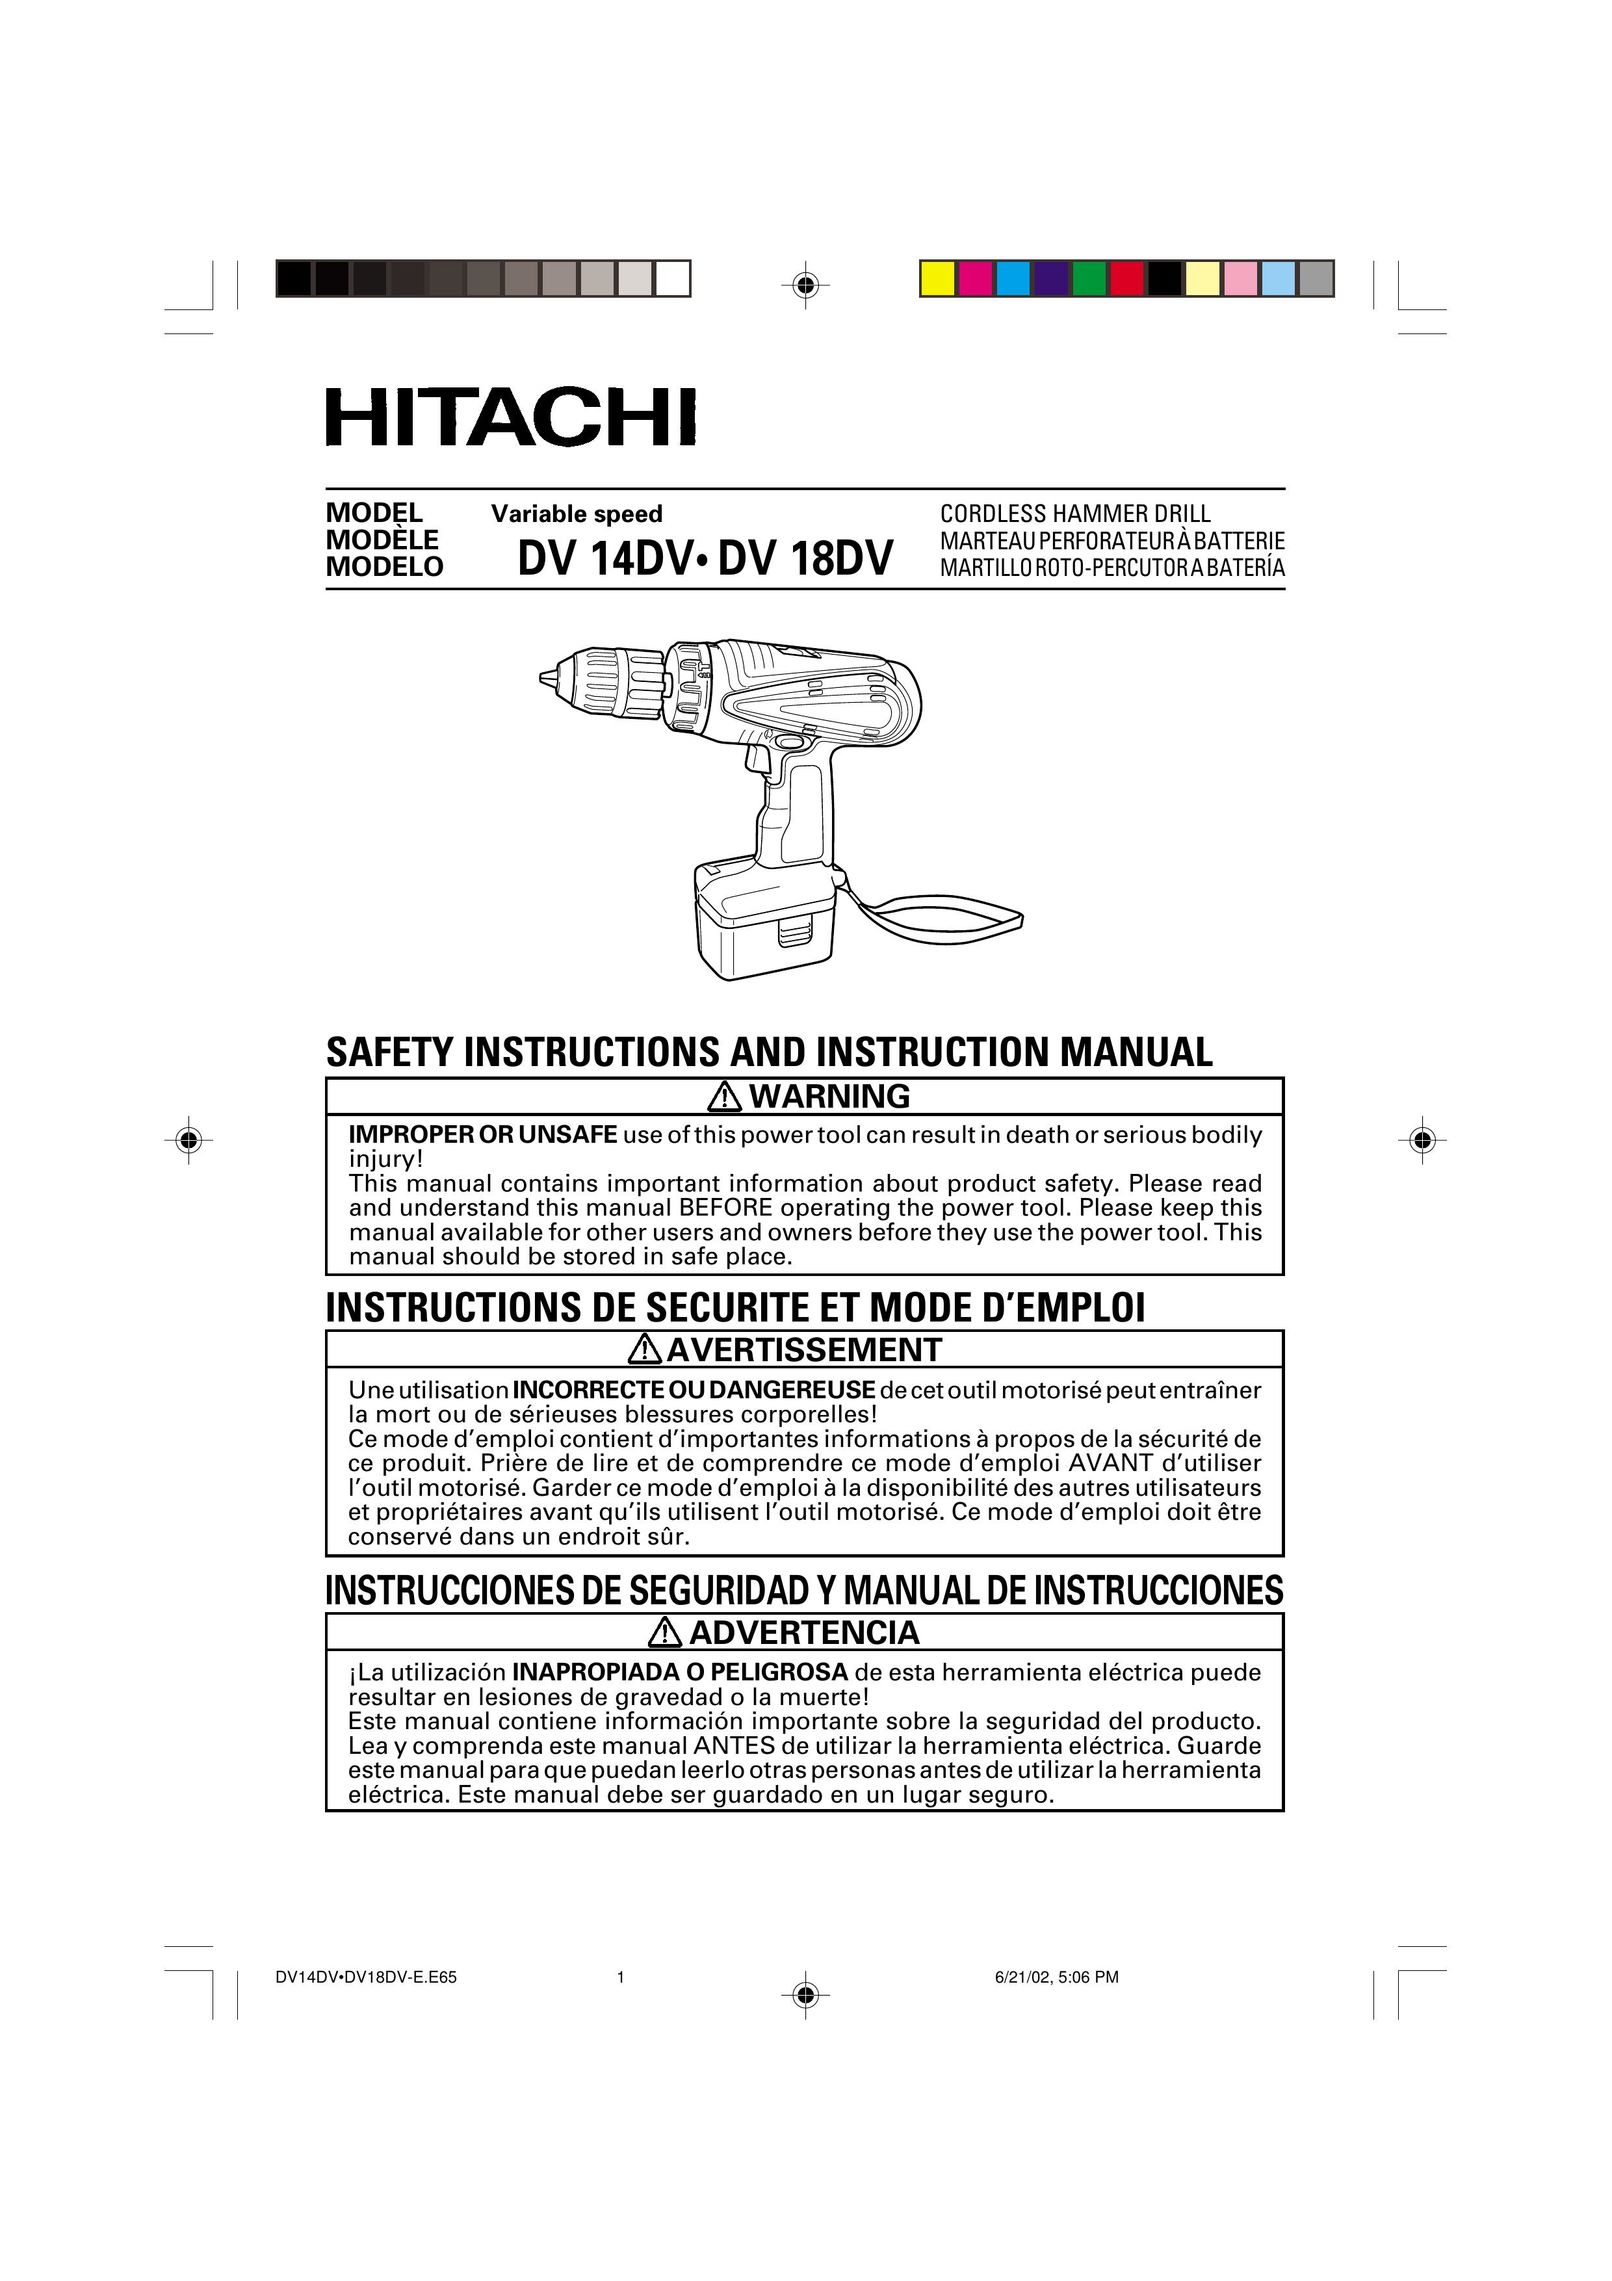 Hitachi DV 14DV Drill User Manual